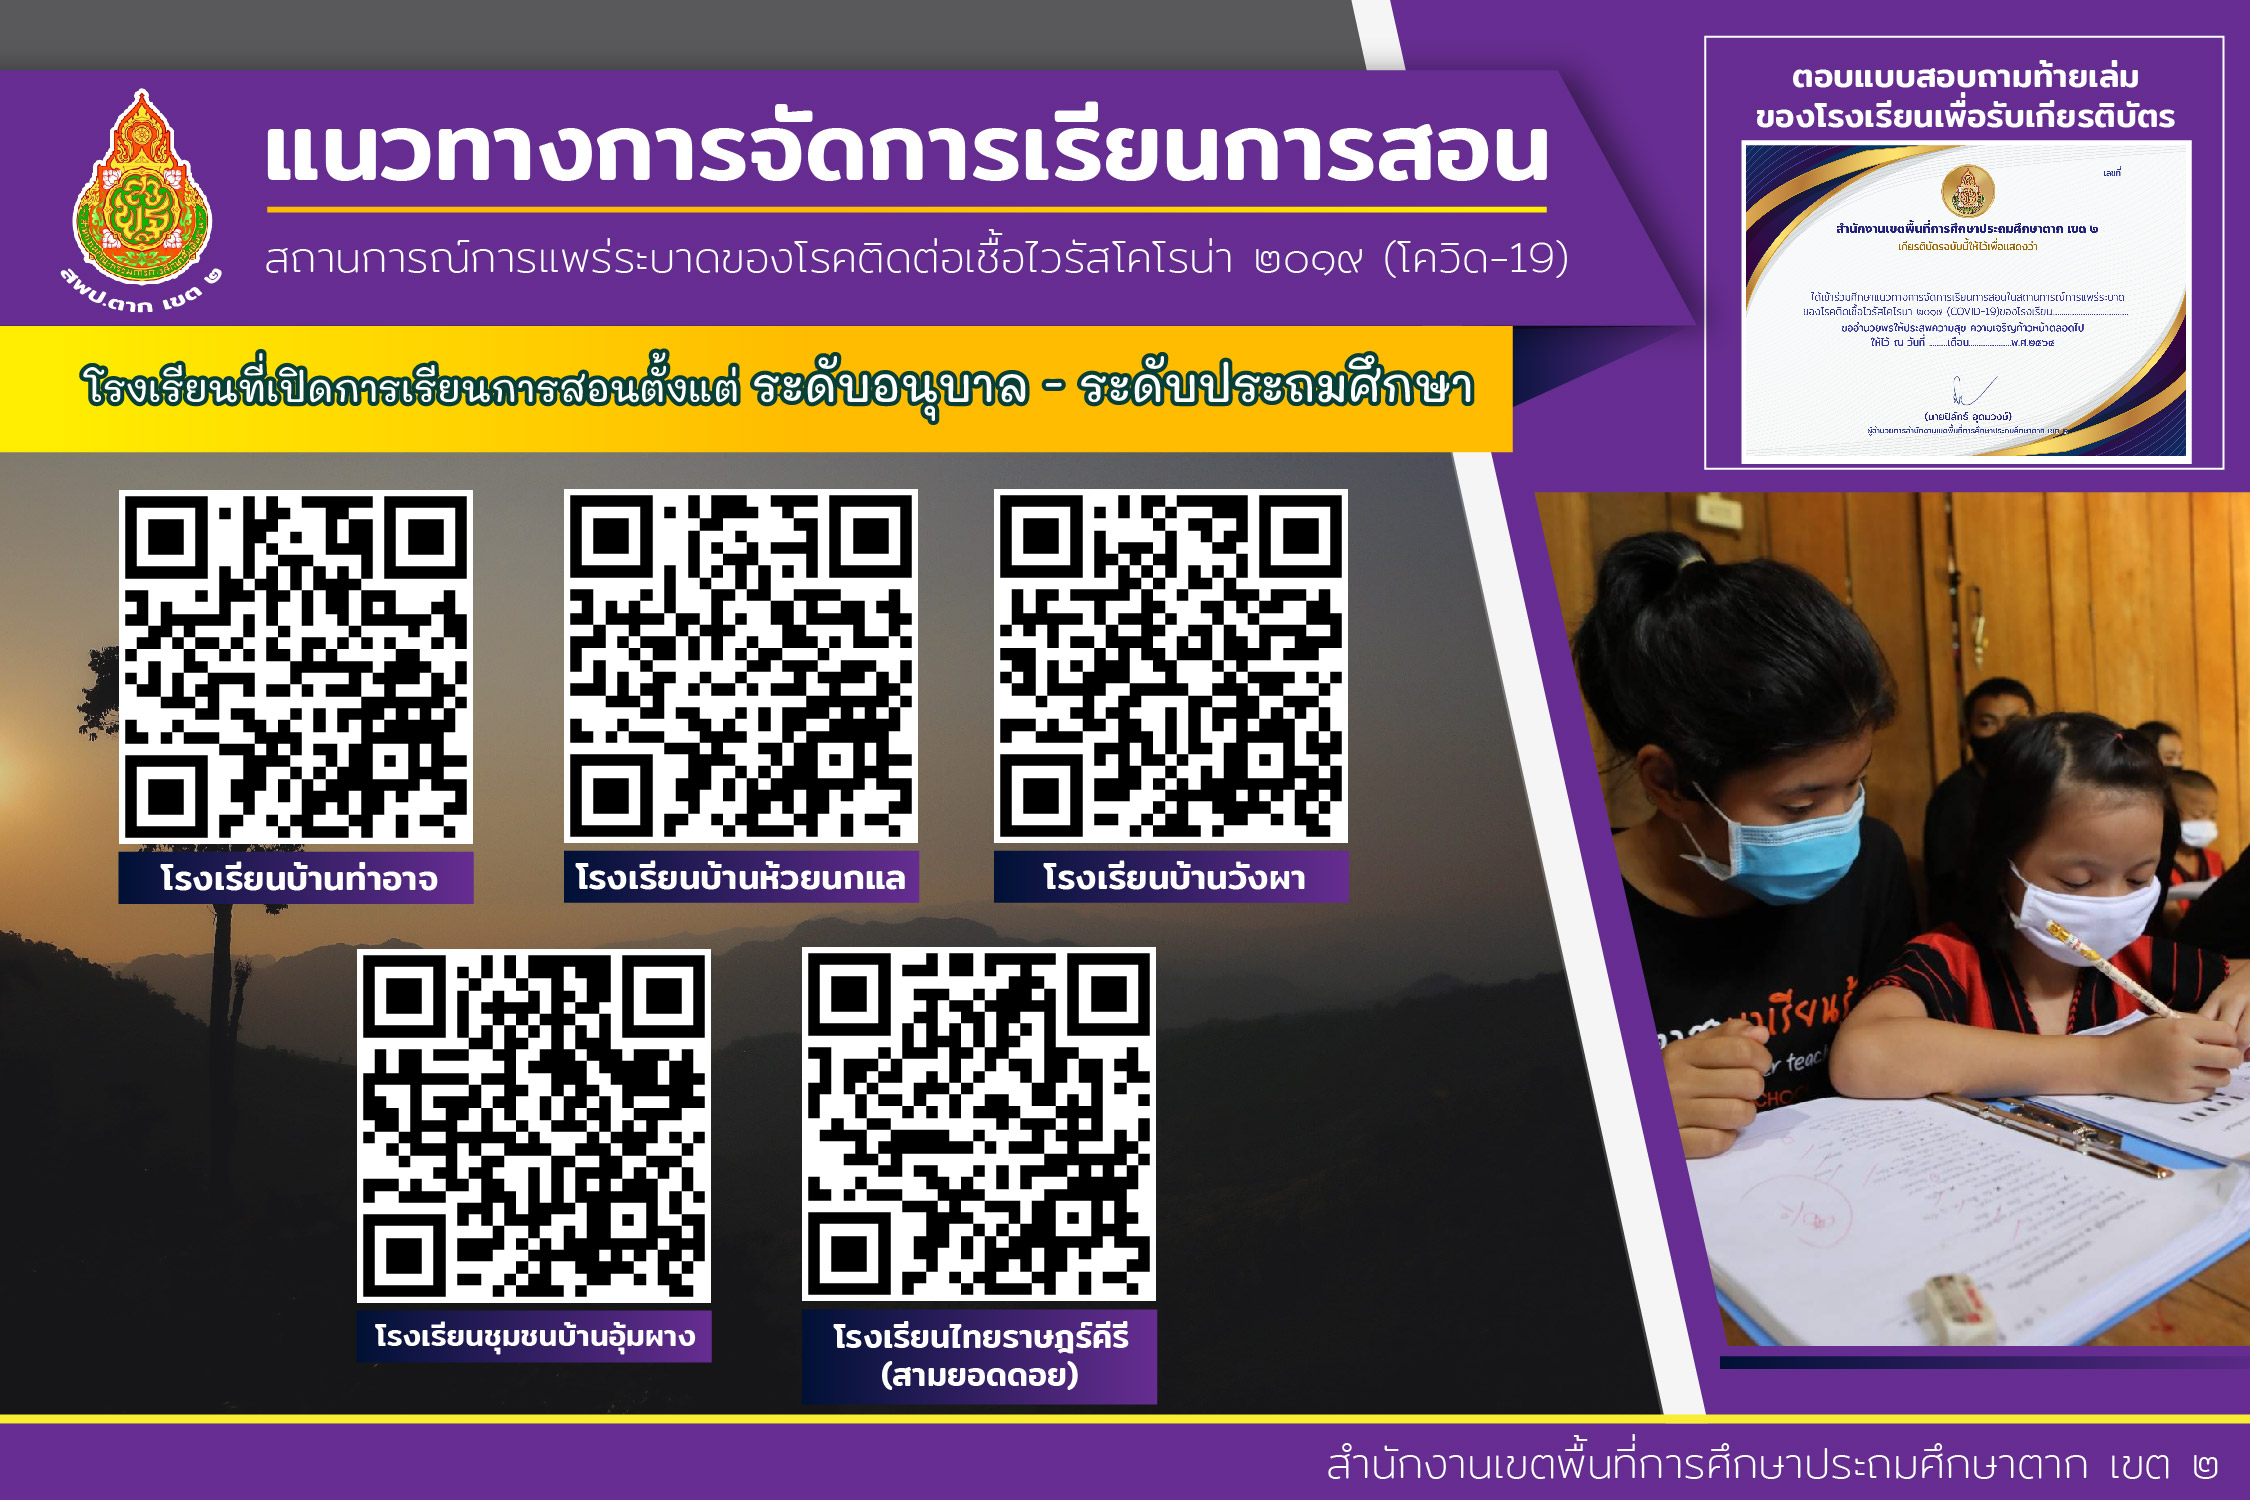 thai romanization 1.4